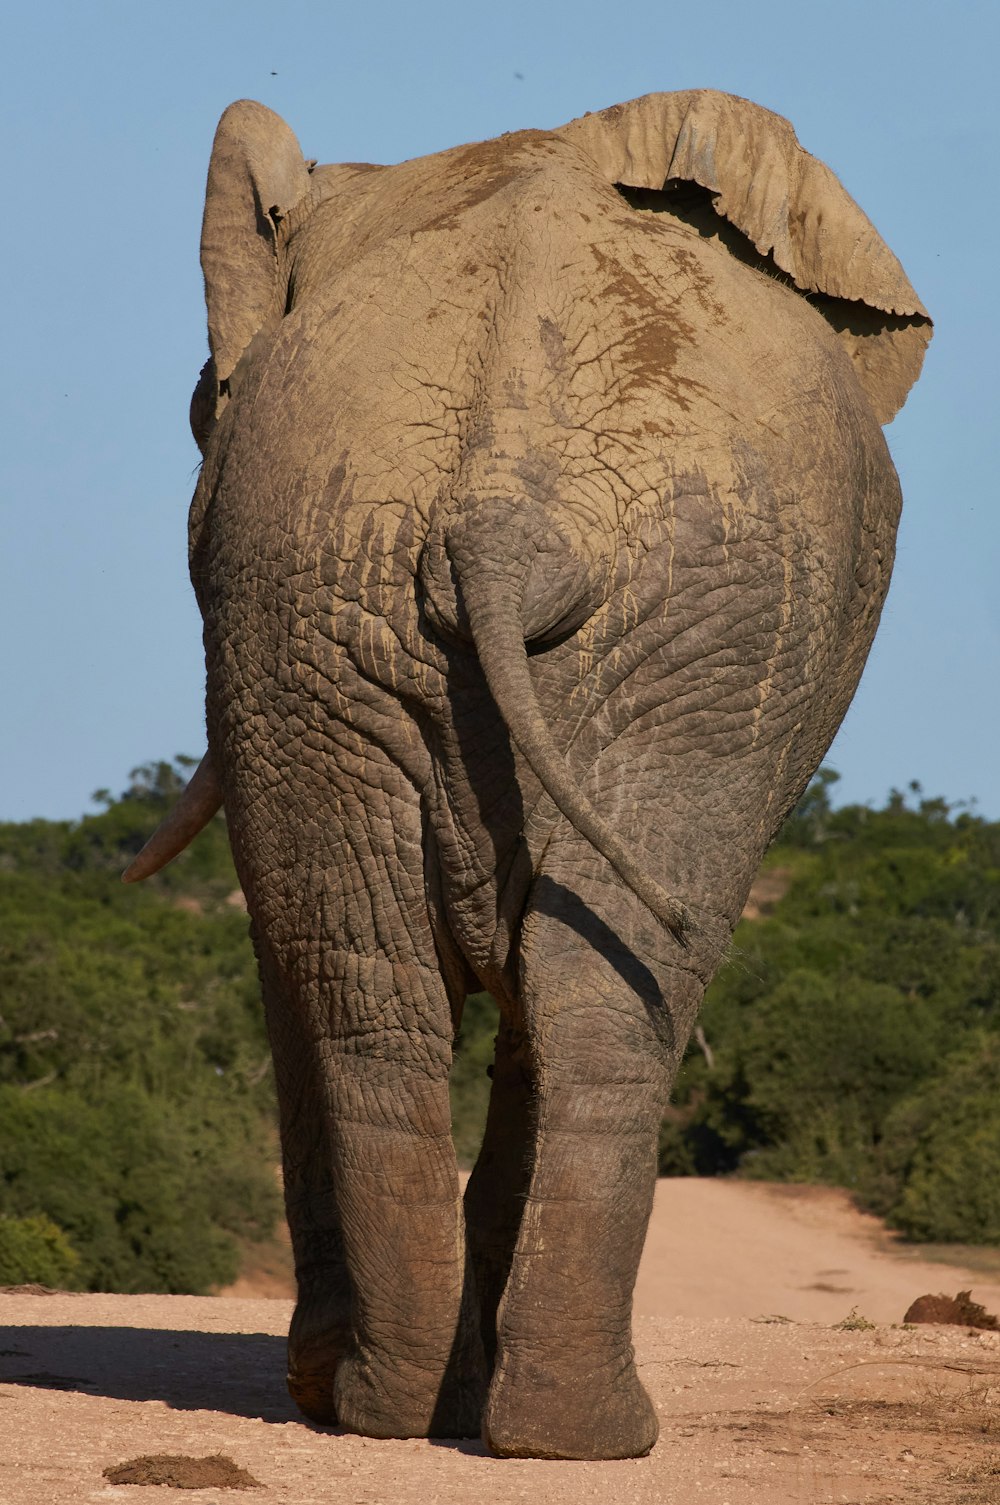 grey elephant walking on dirt ground during daytime